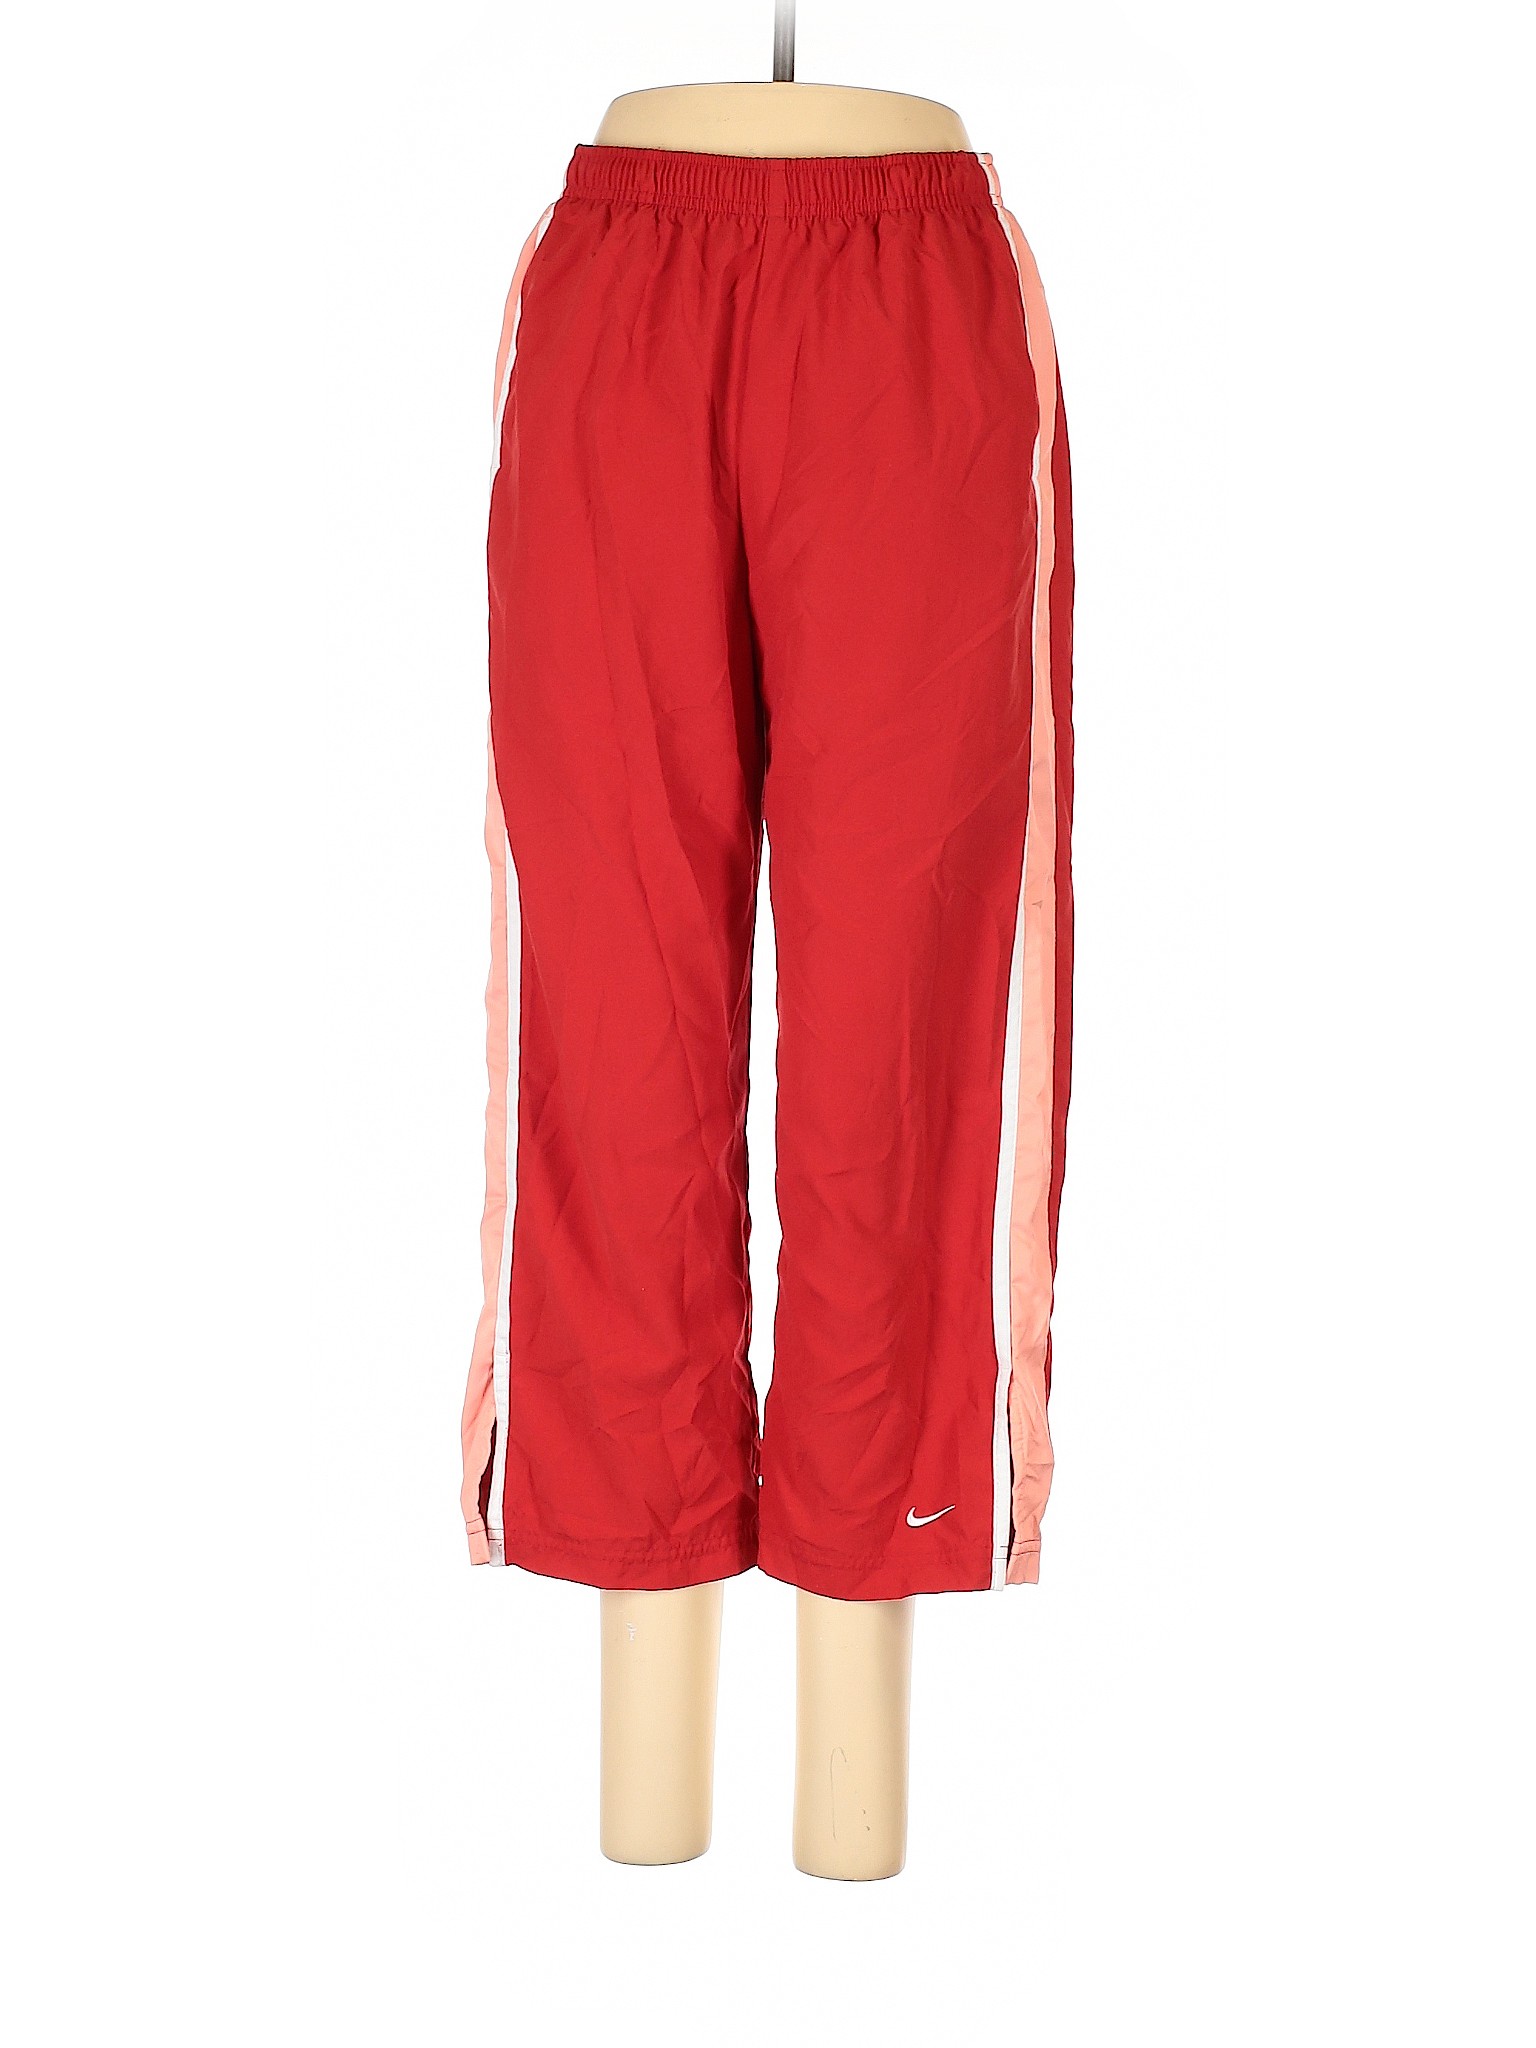 Nike Women Red Active Pants M | eBay